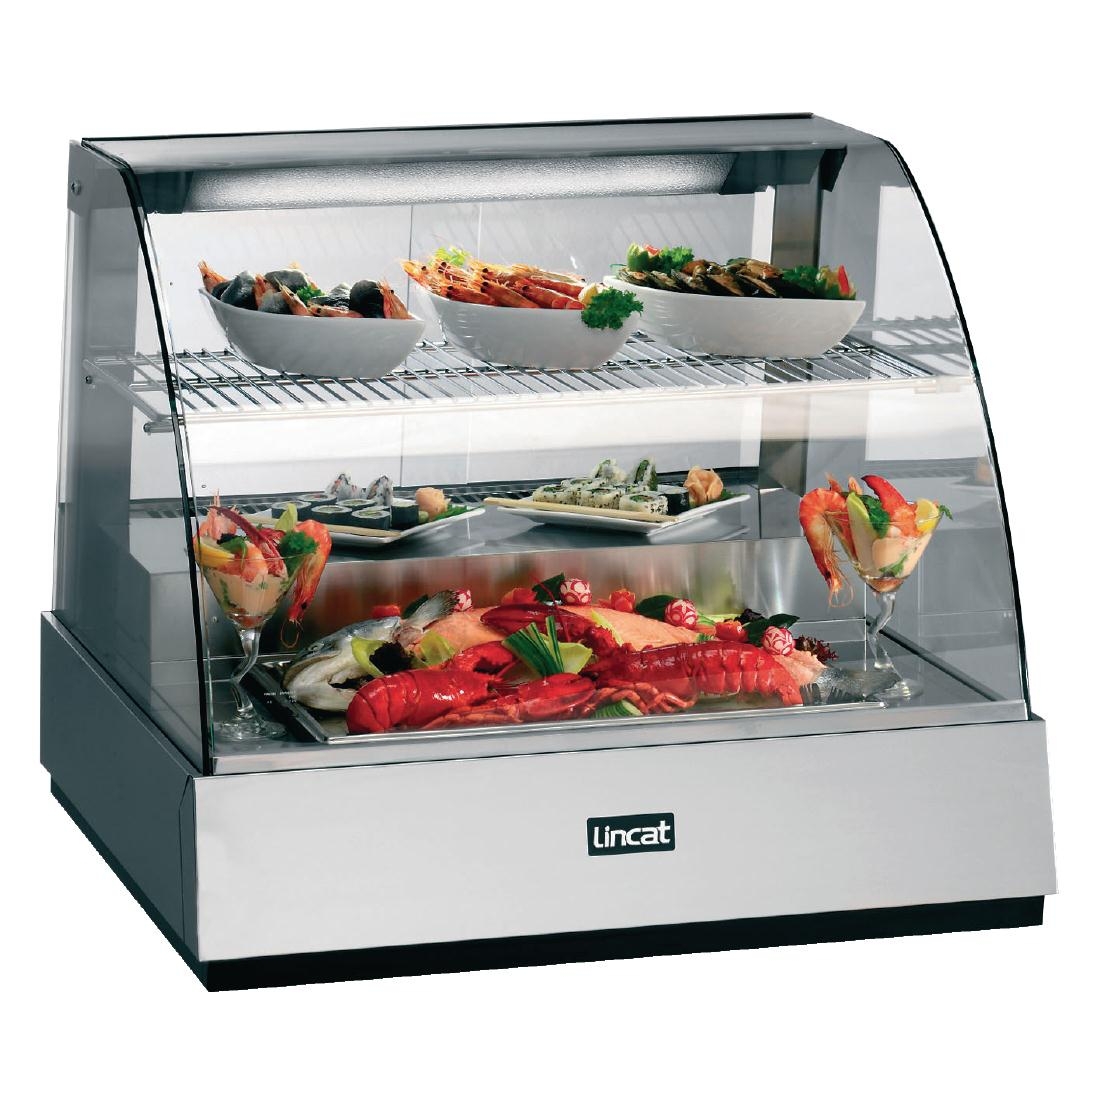 Lincat Refrigerated Food Display Showcase 785mm